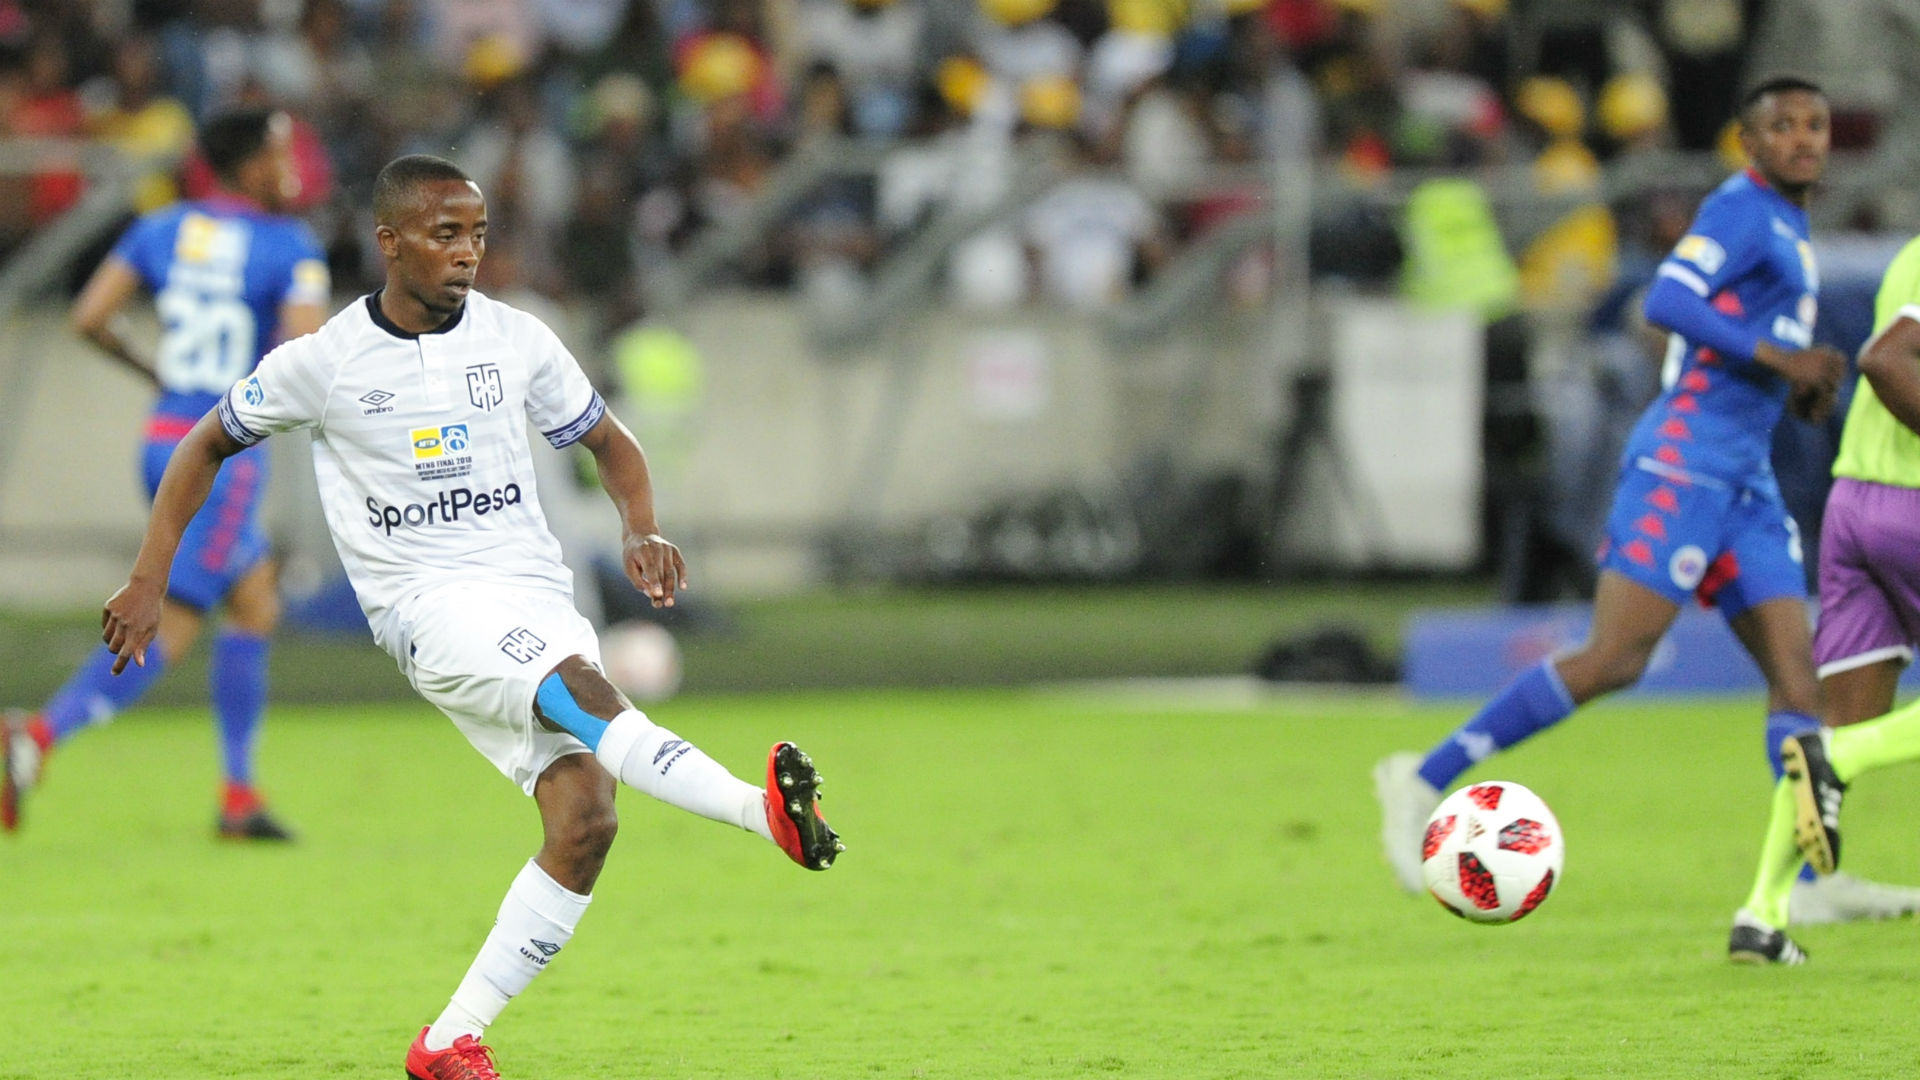 Comitis expecting to 'receive inquiries' for Cape Town City midfielder Nodada